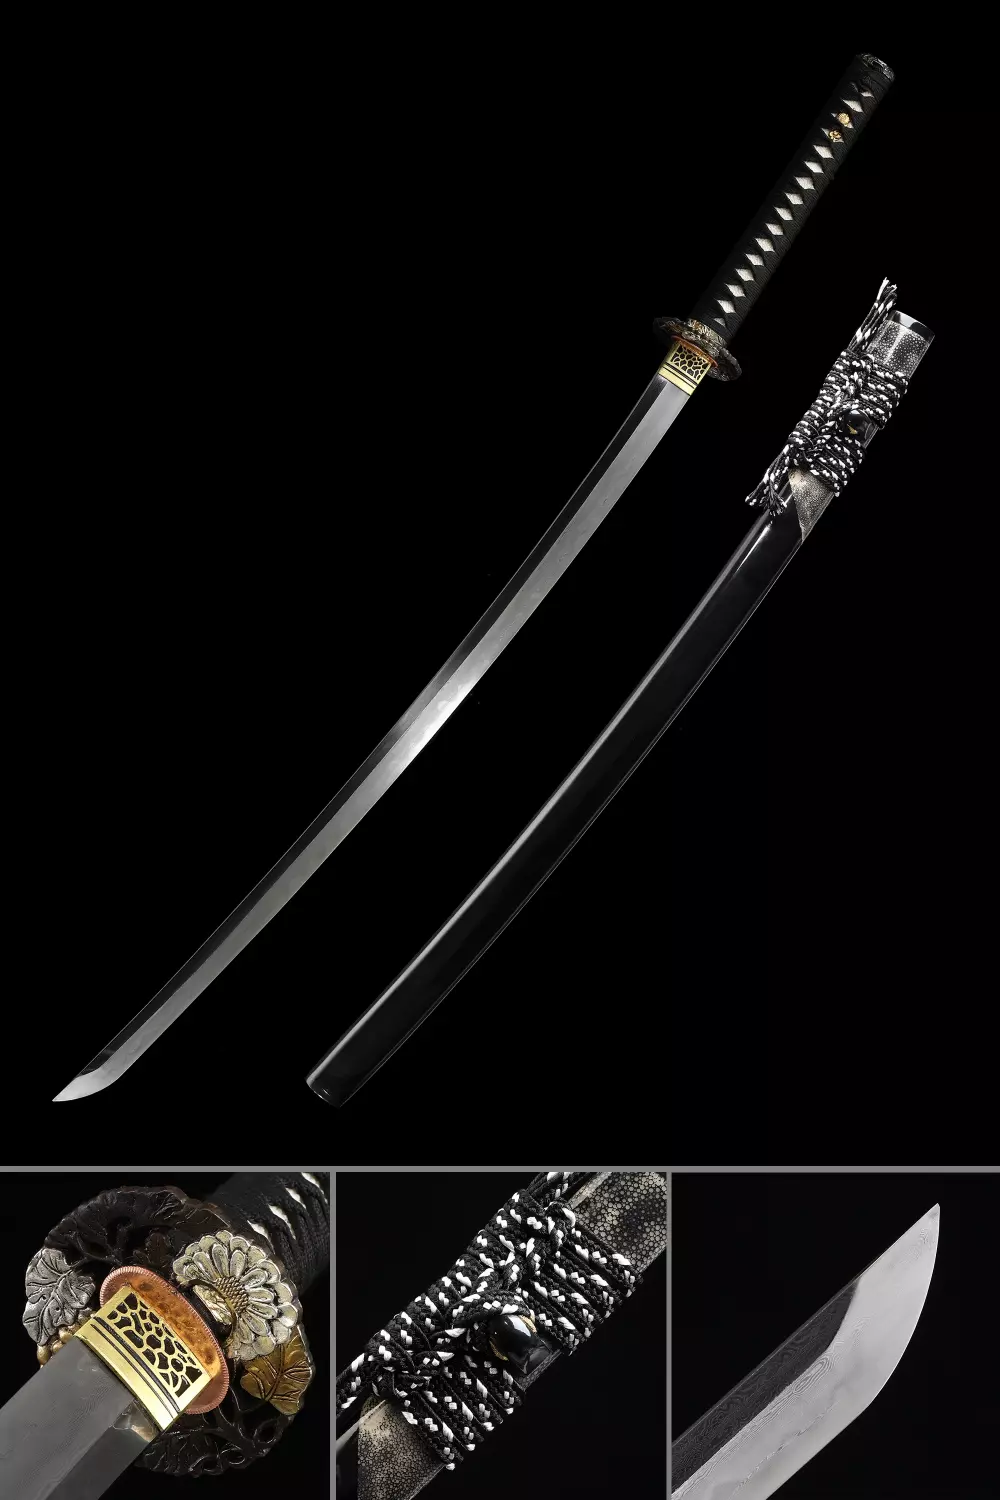  HERO SWORD Katana japonesa Samurai Espada Arcilla Templada T10 Acero  Real Hamon Maquinilla de afeitar Hoja afilada Cuchillo Dragón Espiga  Completa Cobre Tsuba, Kashira : Deportes y Actividades al Aire Libre